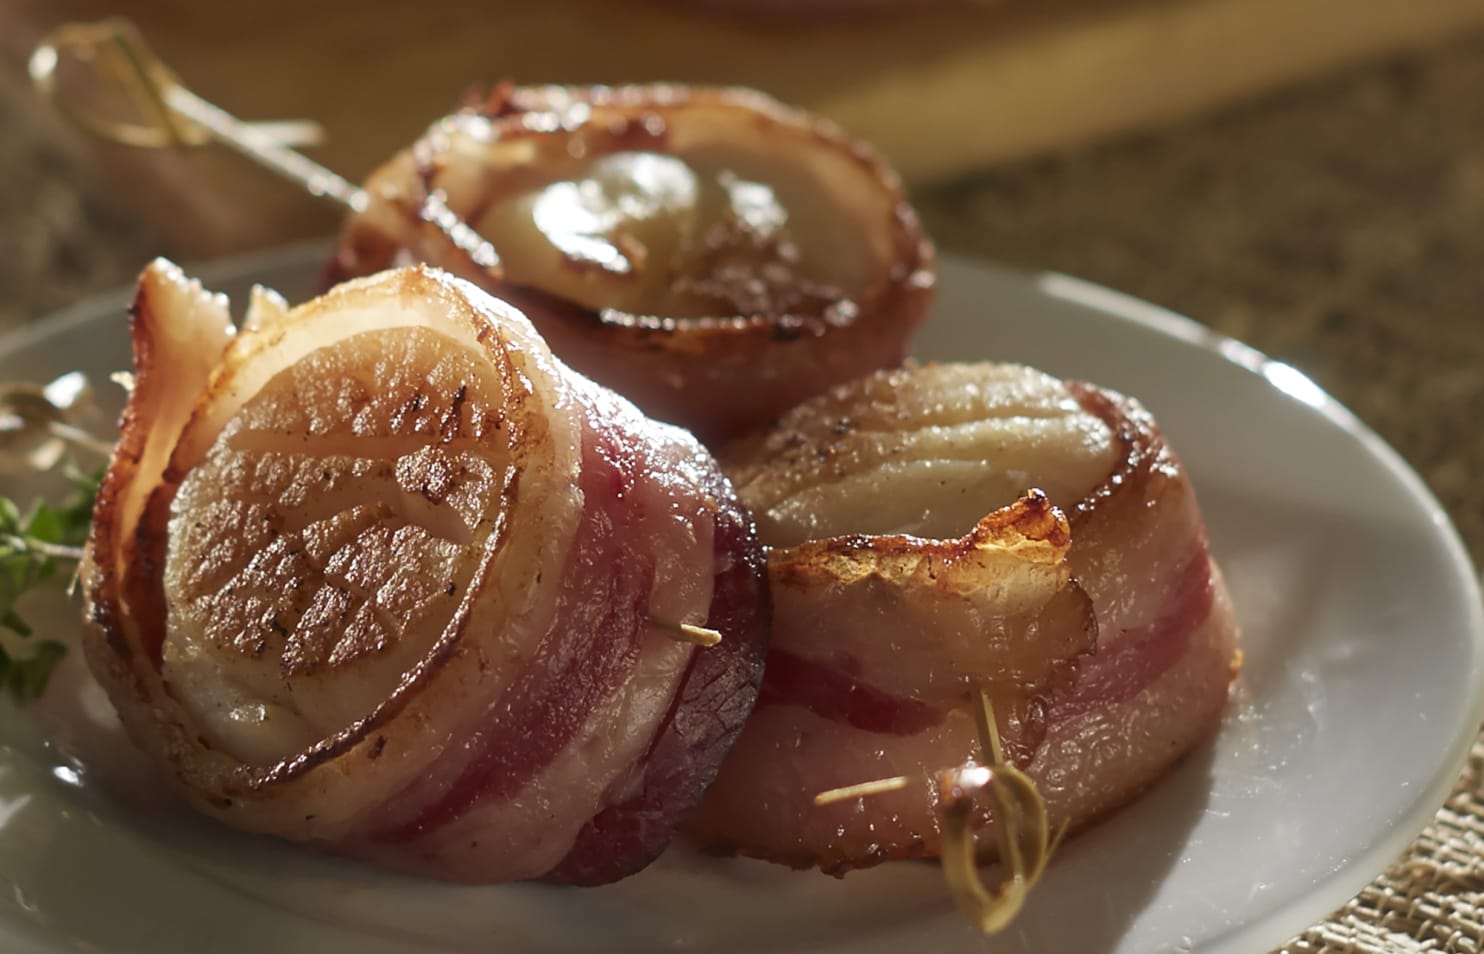 YARN, These bacon-wrapped scallops, phenomenal.